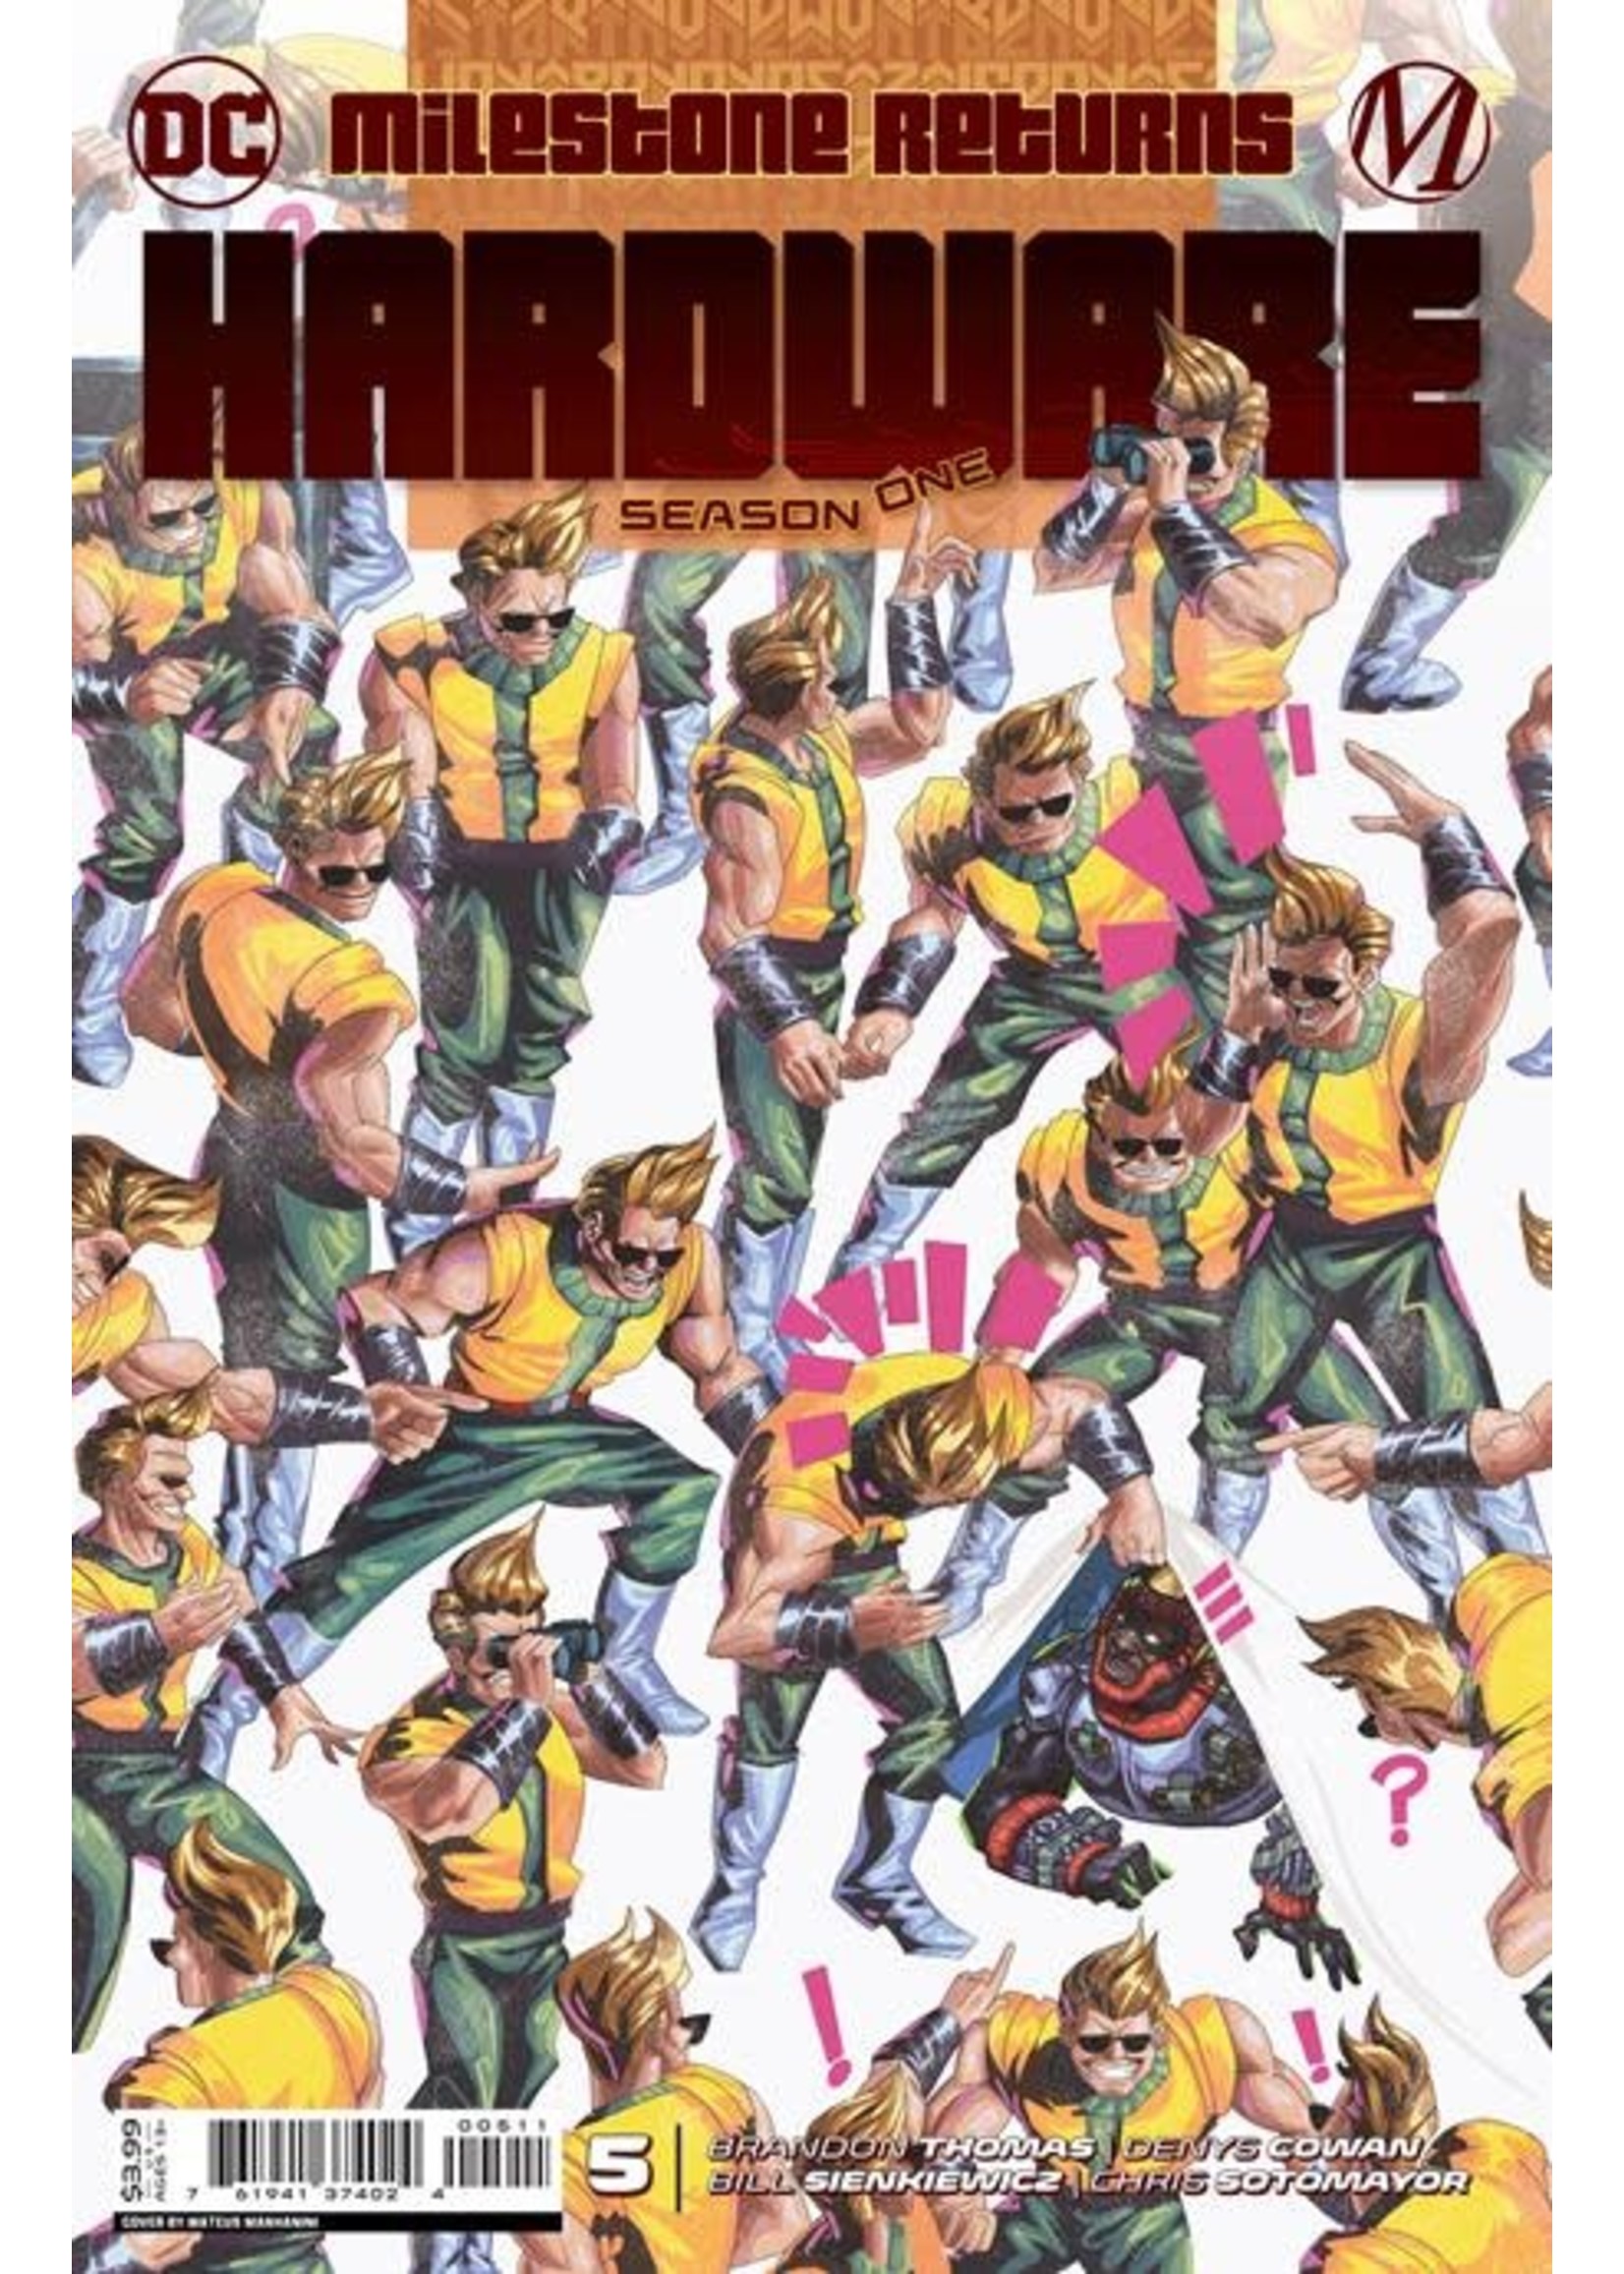 DC COMICS HARDWARE SEASON ONE complete 6 issue series